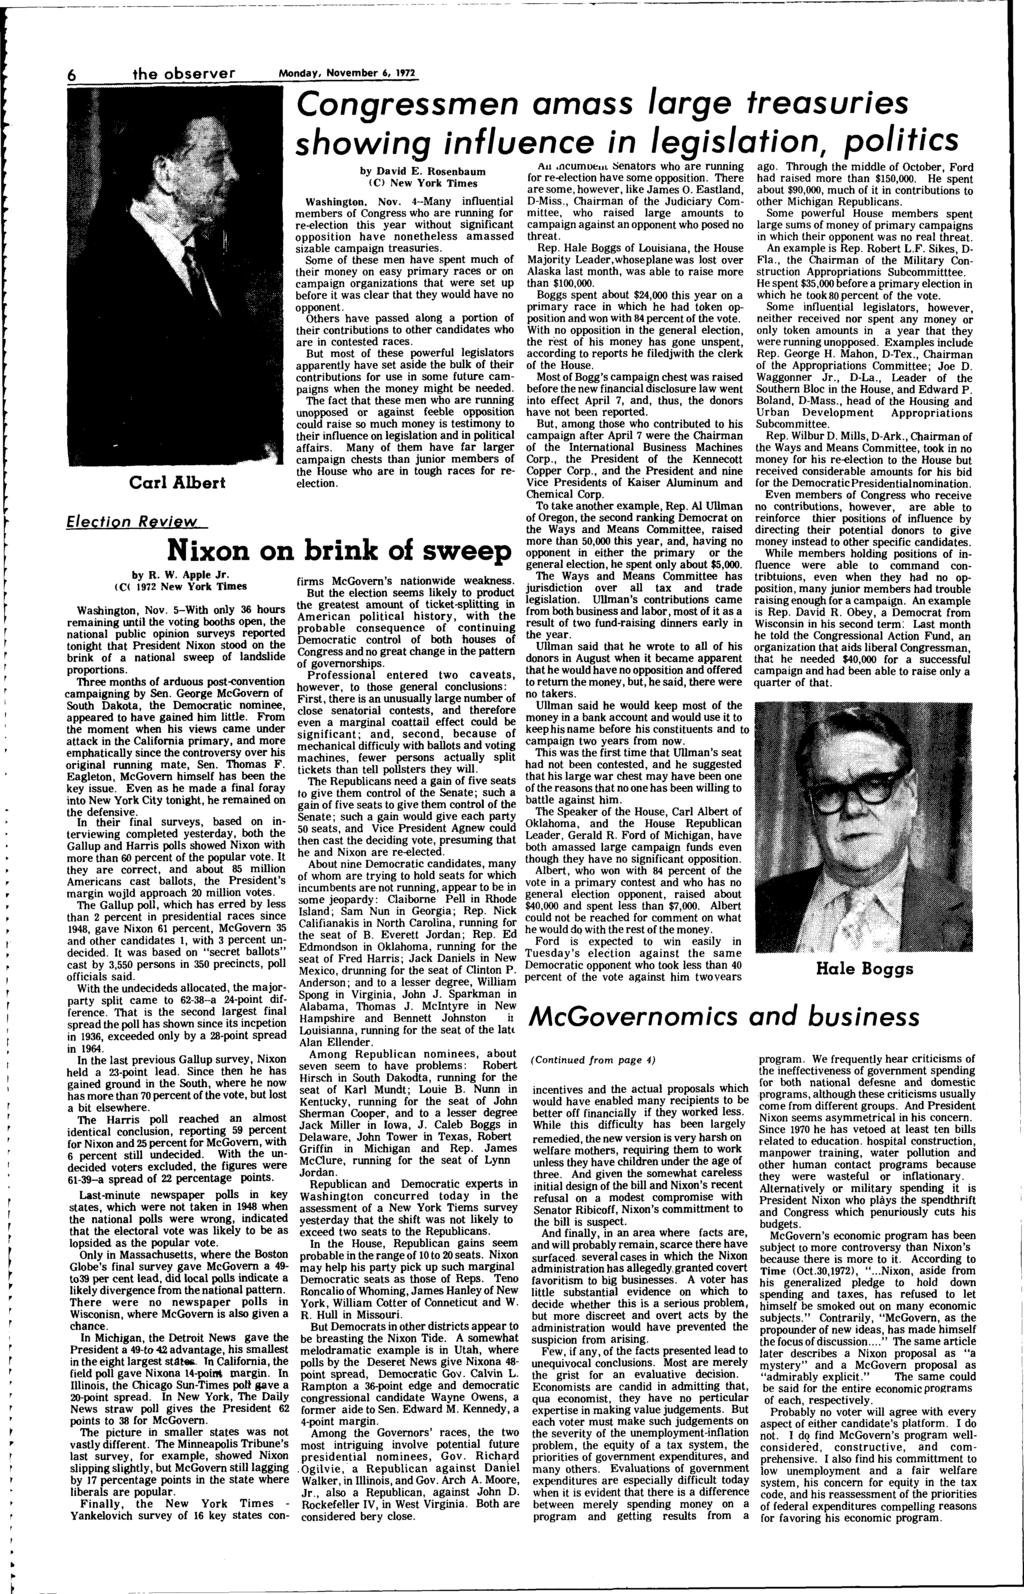 -----~~--- ~ Cal Albet Election Review Novembe 6, 1972 Congessmen amass lage teasuies showing influence in legislation, politics b D "d E R b Au.ncumoeuL Senatos who ae unning ago.